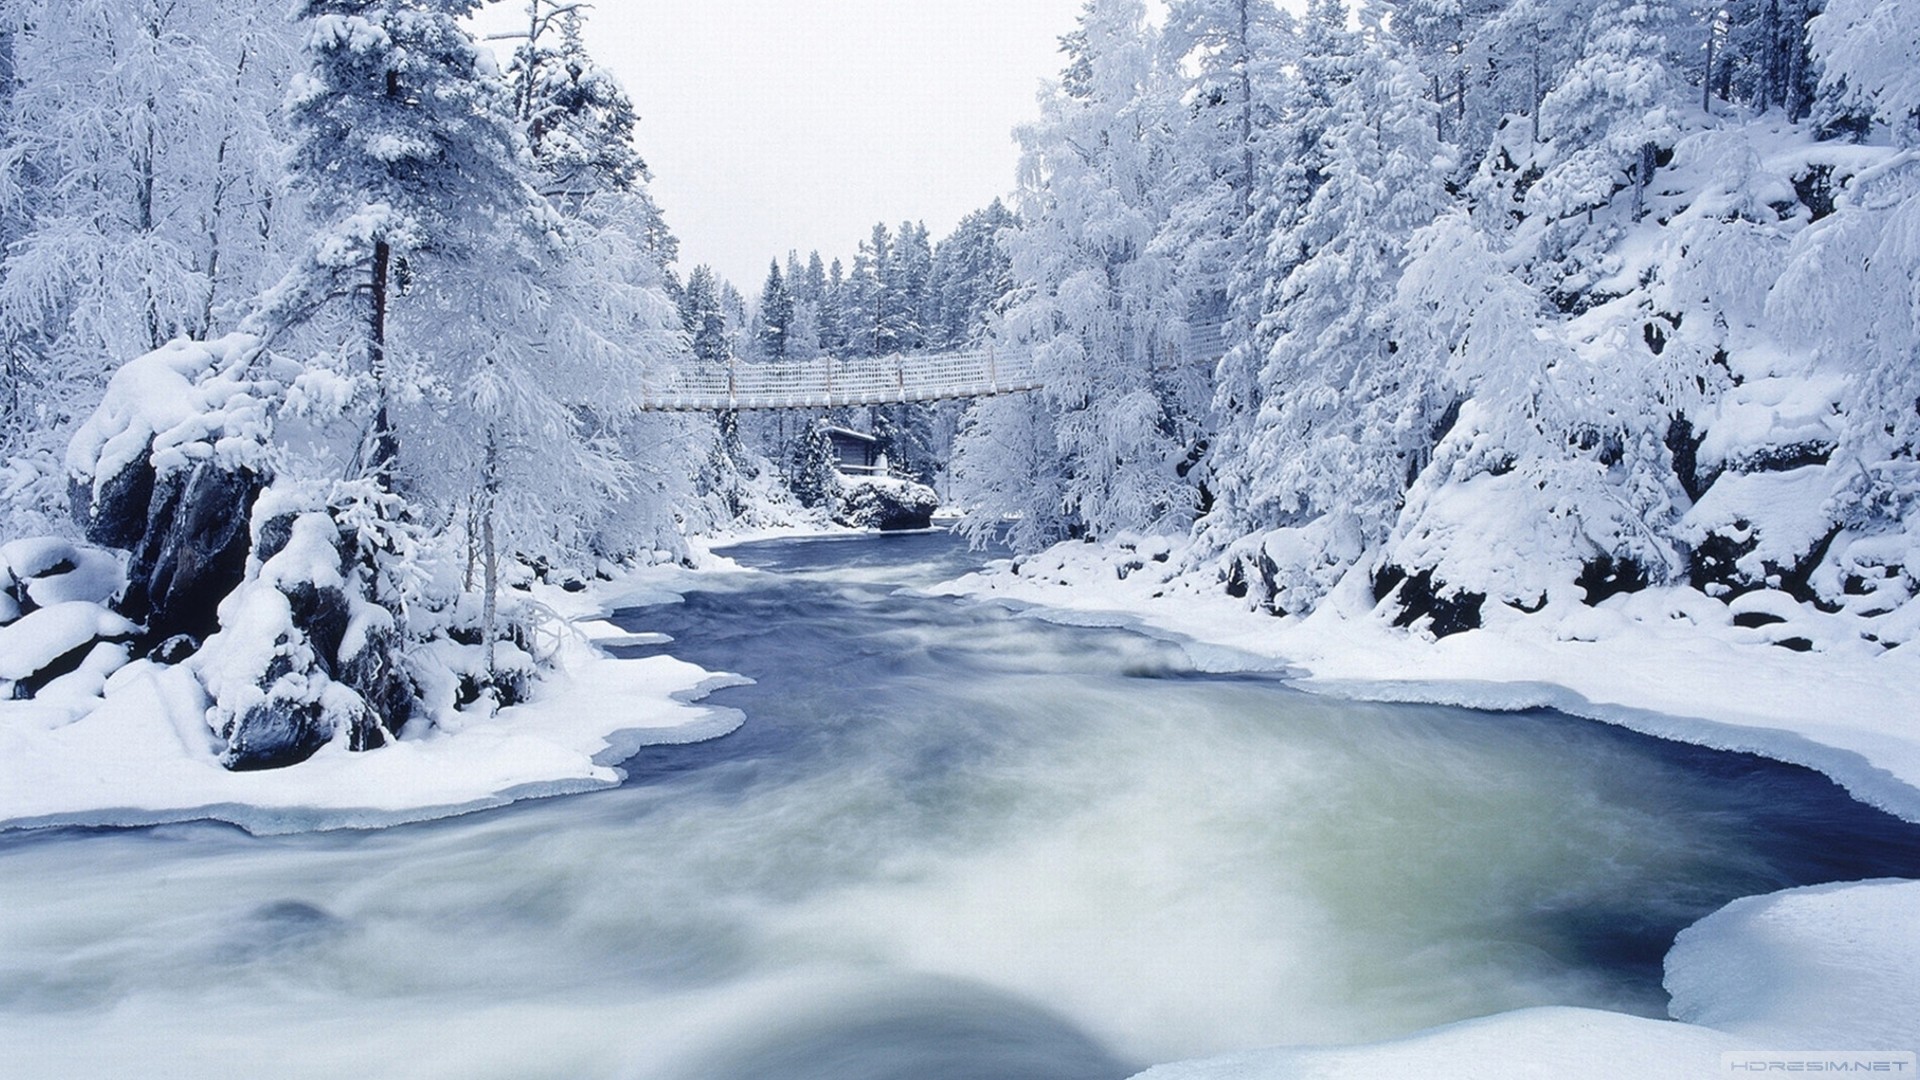 nehir,doğa,kar,kış,ağaç,köprü